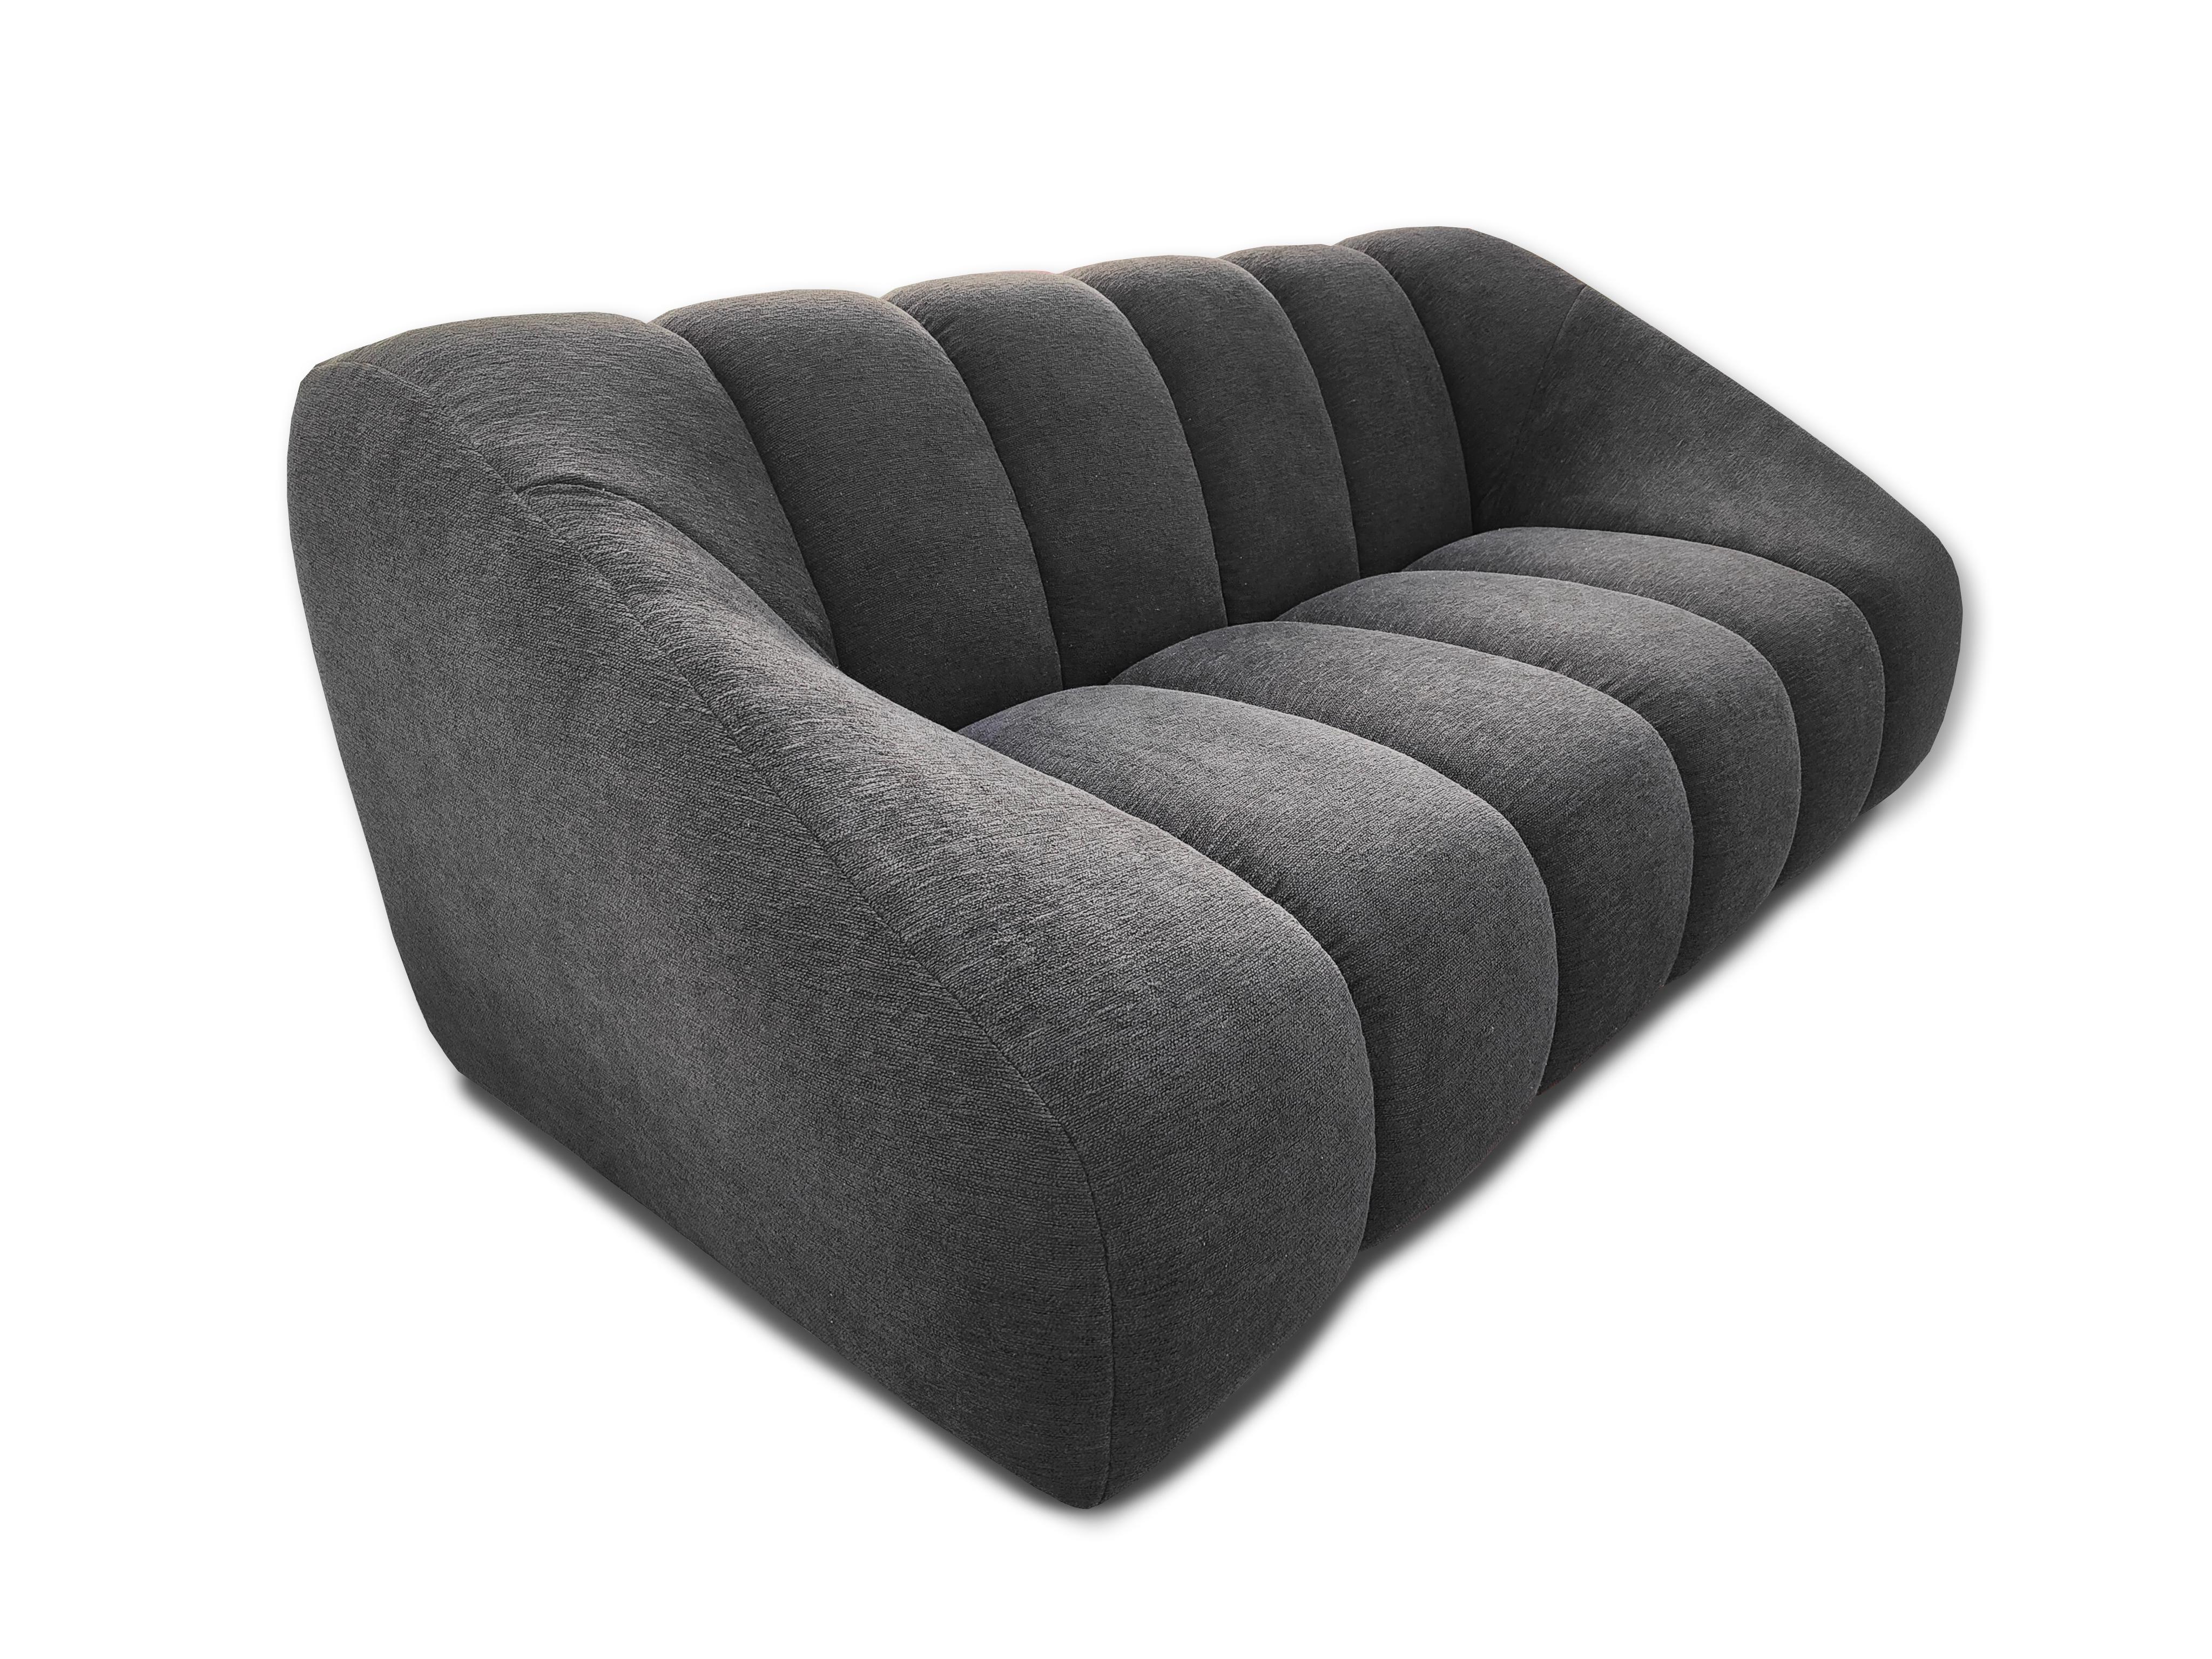 NEW 2-Sitzer-Sofa in schwarzem Stoff. Von Legame Italia (Italian) im Angebot